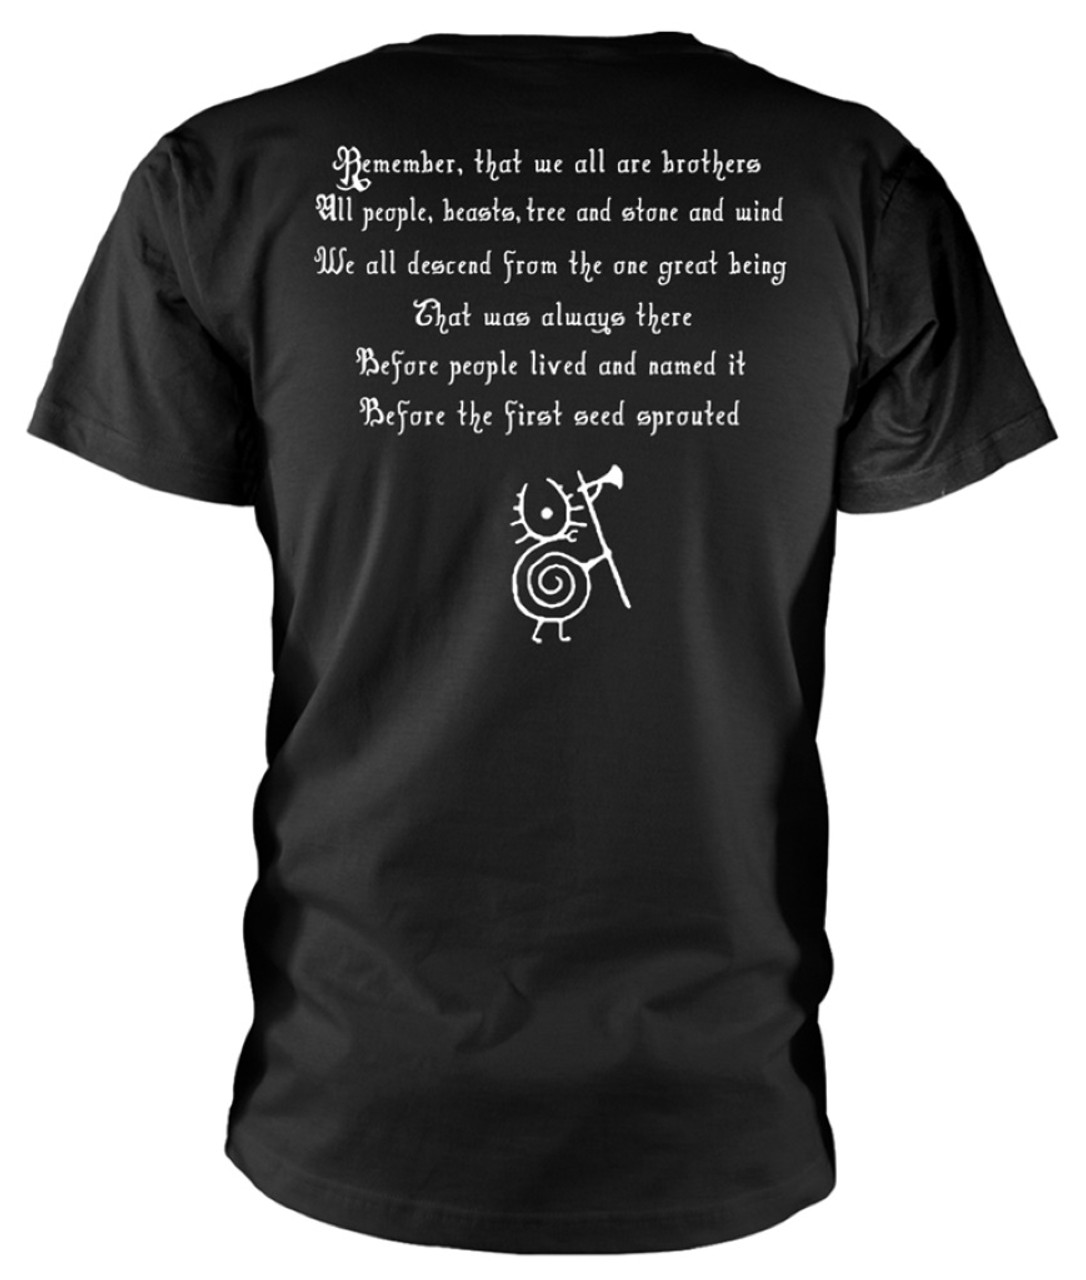 Heilung 'Remember' (Black) T-Shirt